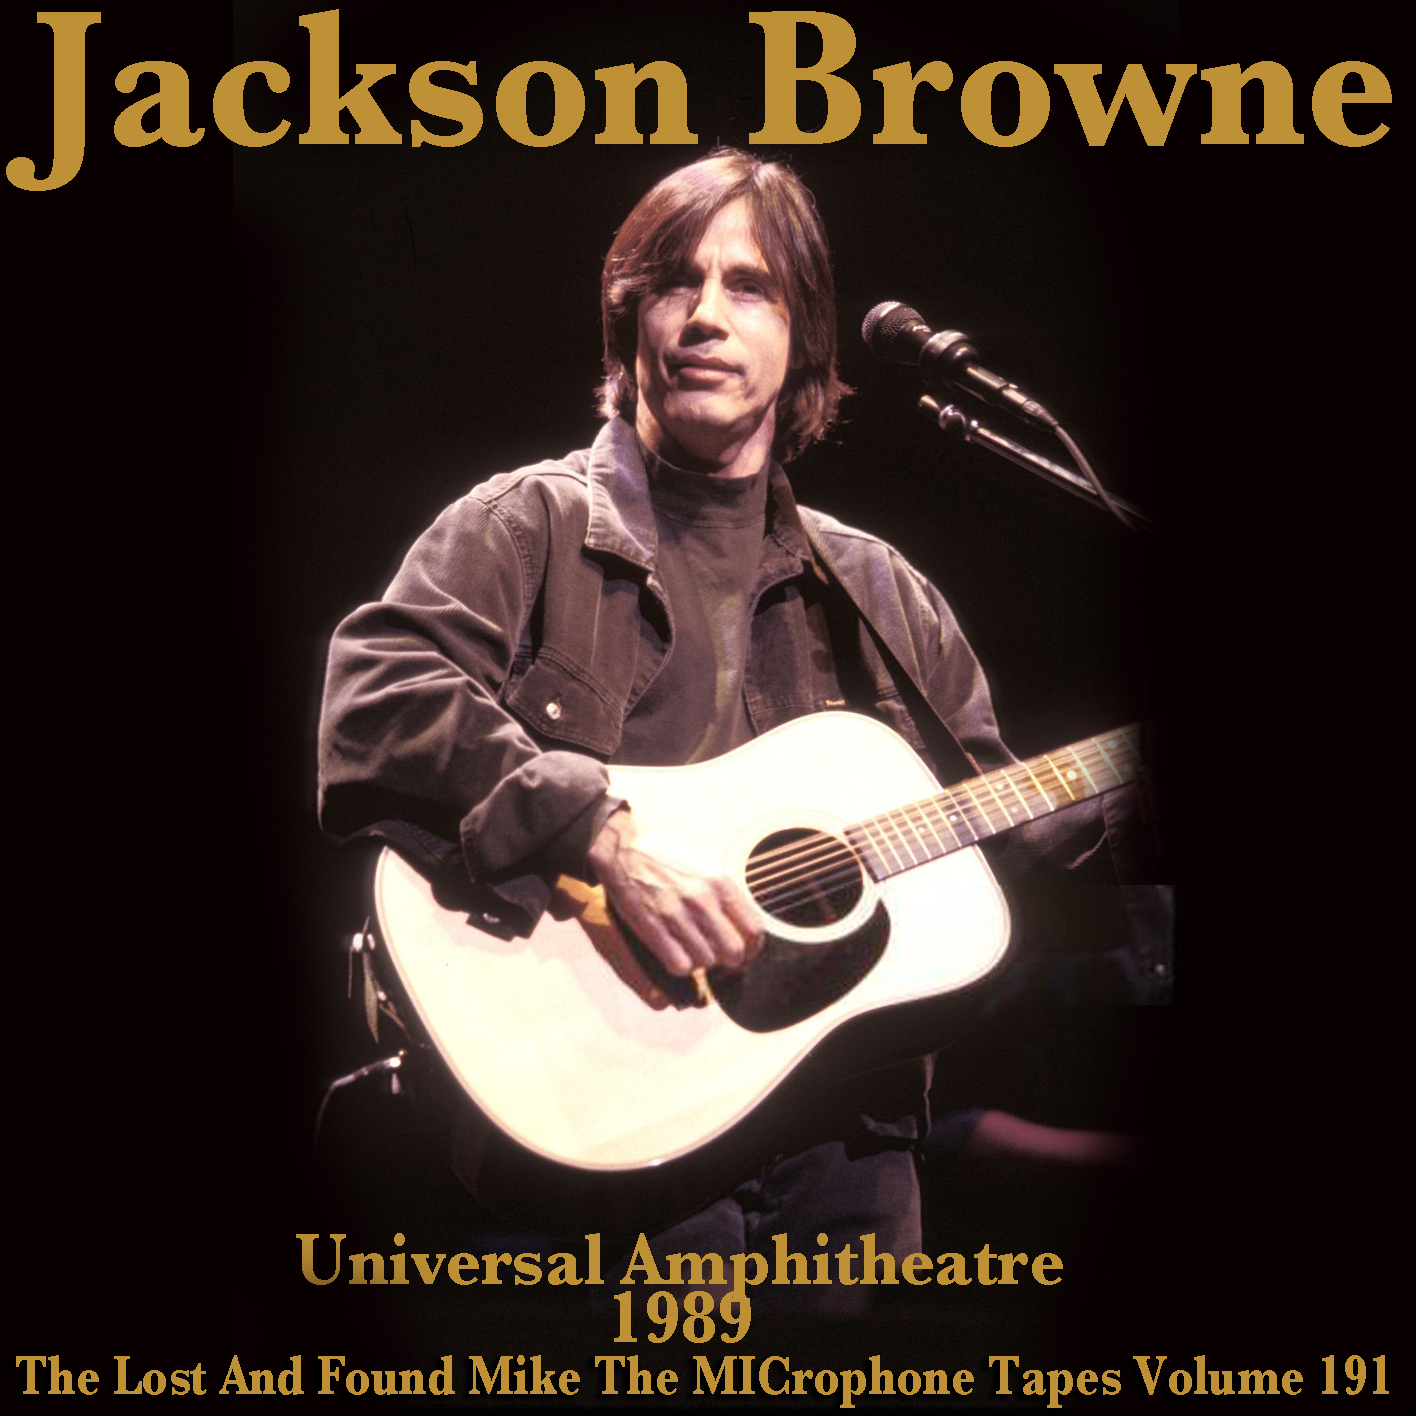 JacksonBrowne1989-08-13UniversalAmphitheatreLosAngelesCA (2).jpg